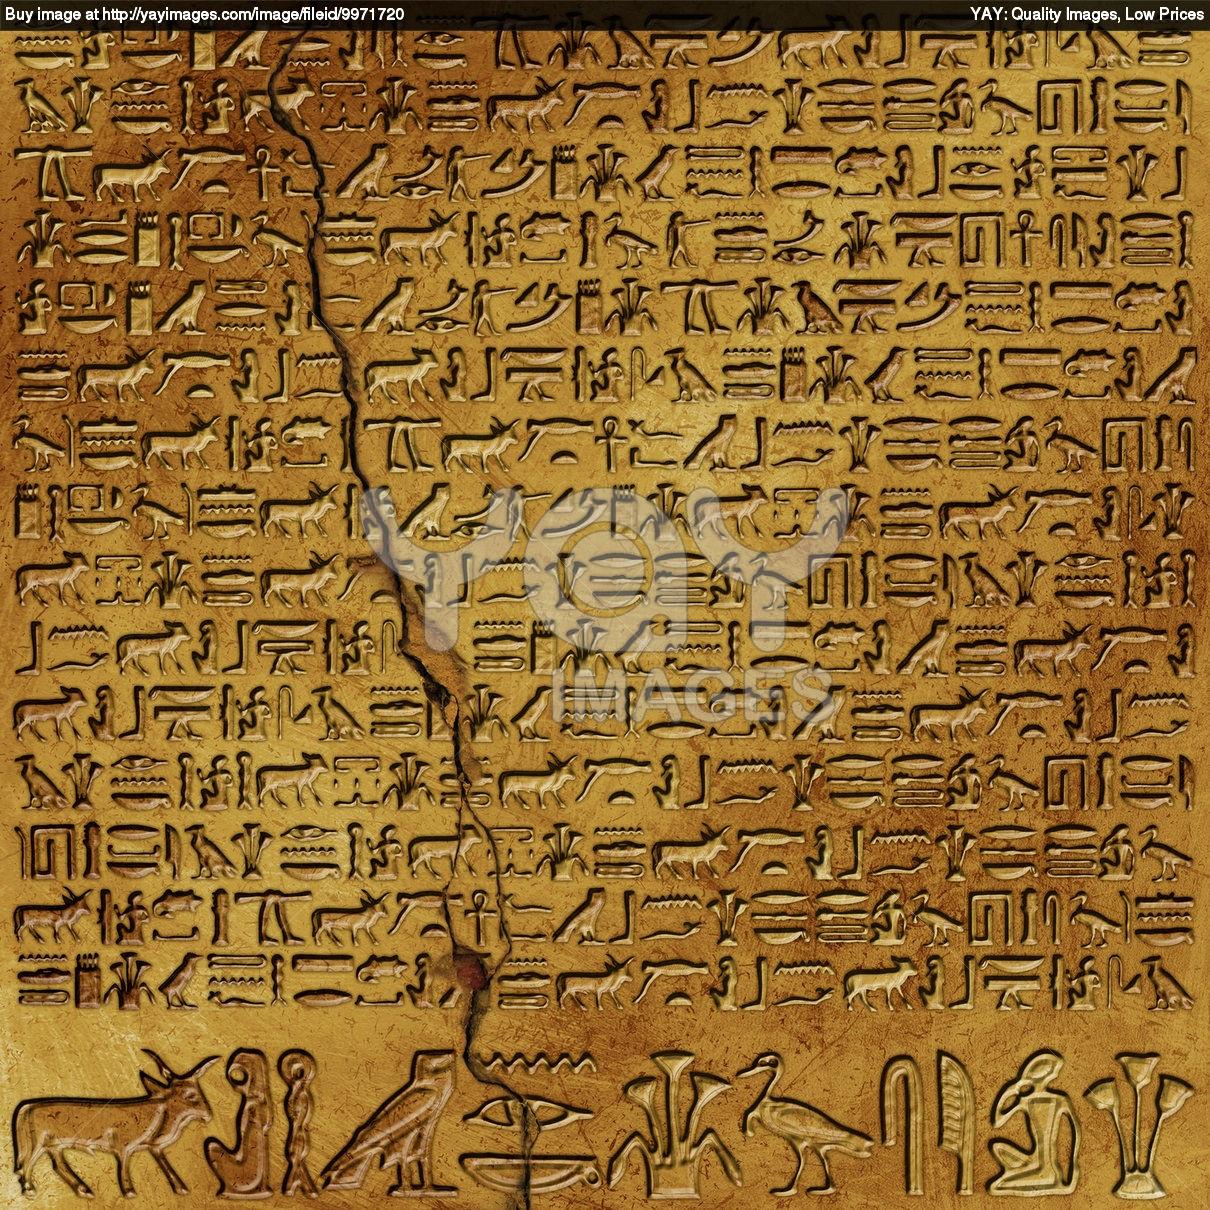 egyptian hieroglyphics wallpaper by DatSonicNerd on DeviantArt